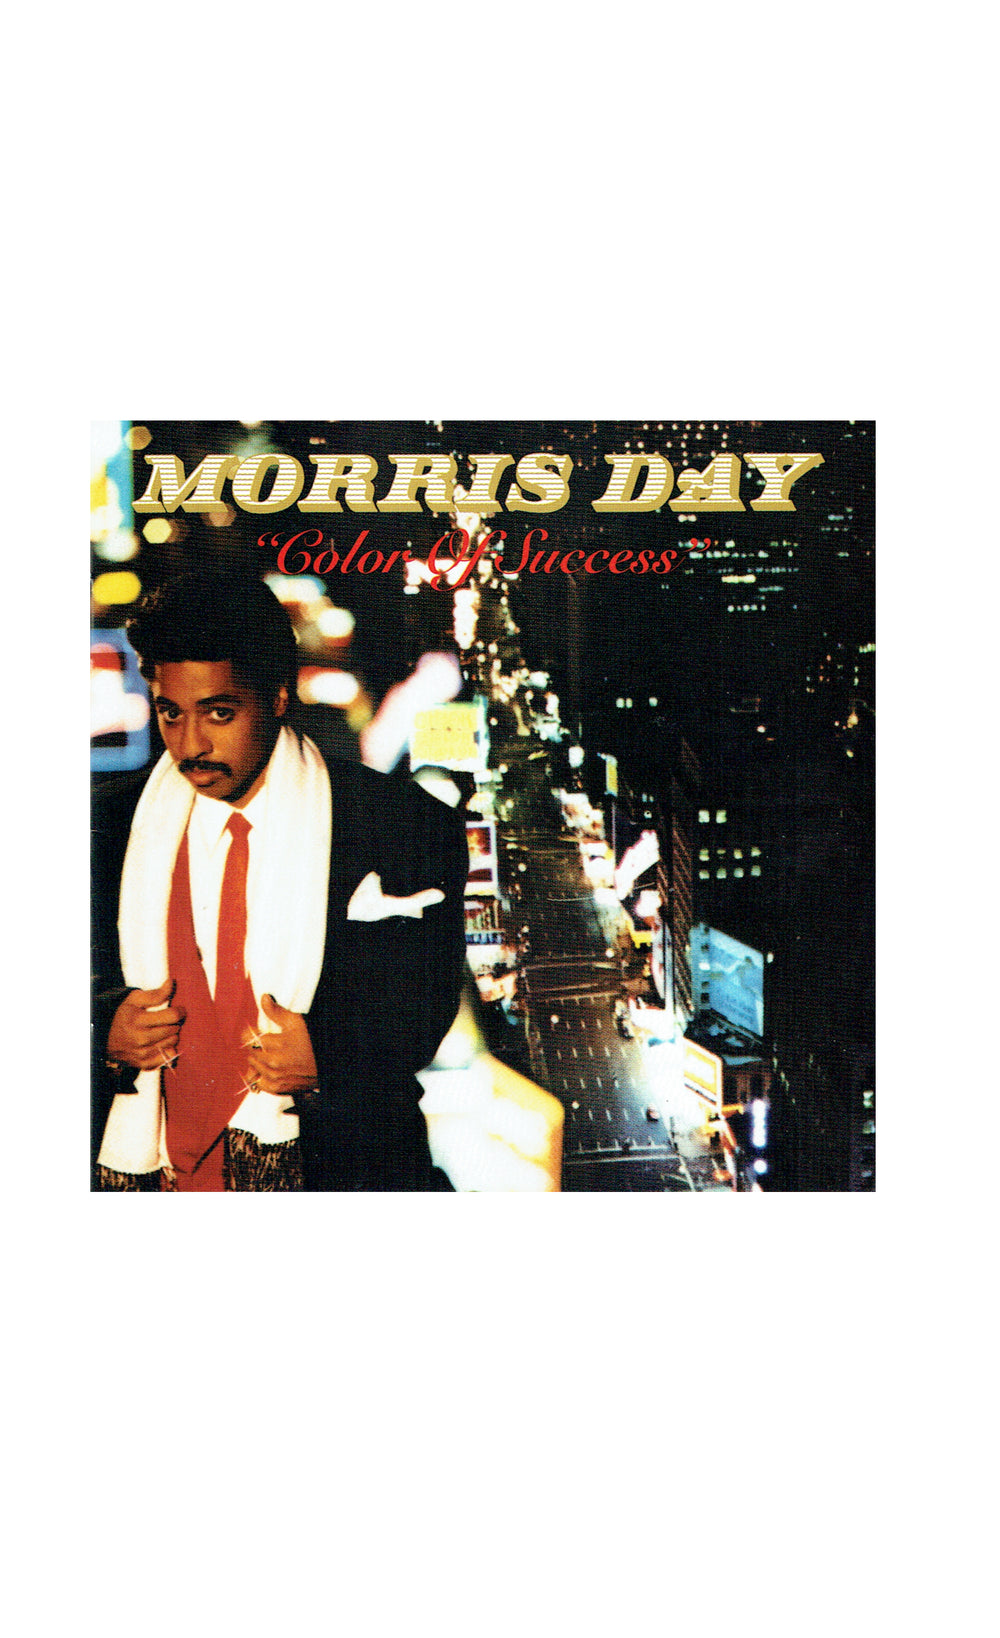 Morris Day Color Of Success CD Album Original 1985 US Prince